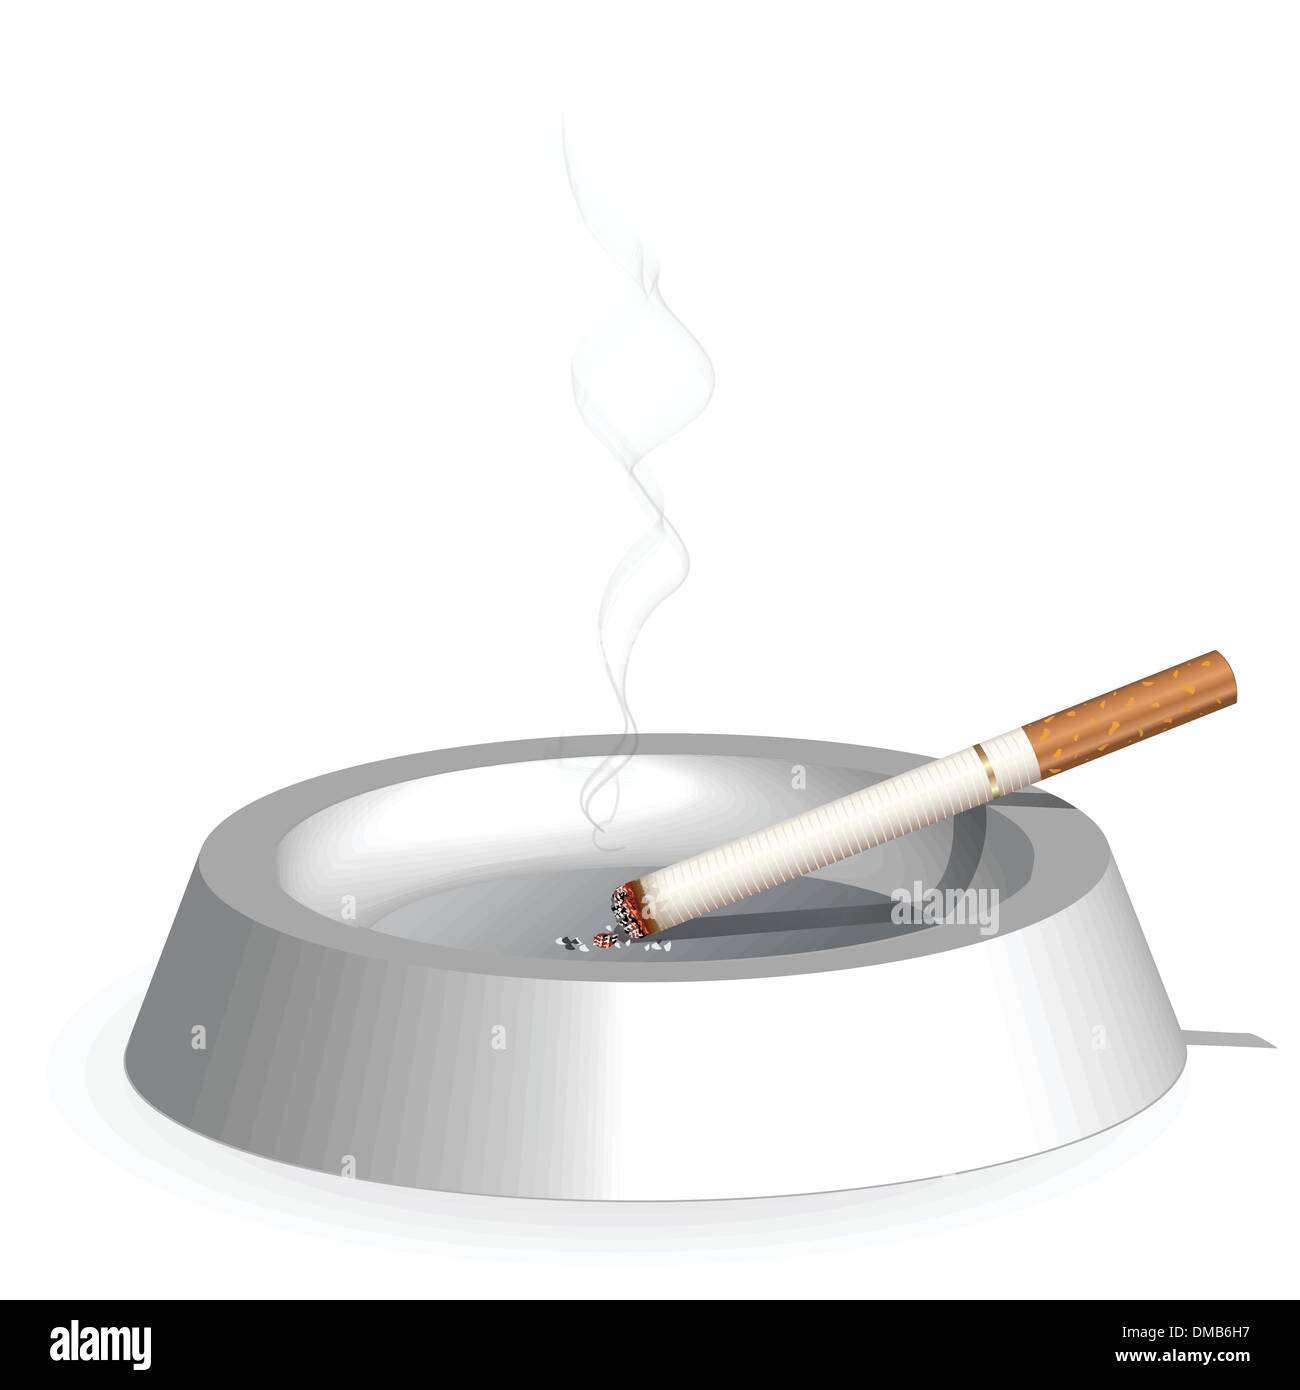 Zigaretten zigaretten aschenbecher rauch Stock-Vektorgrafiken kaufen - Alamy